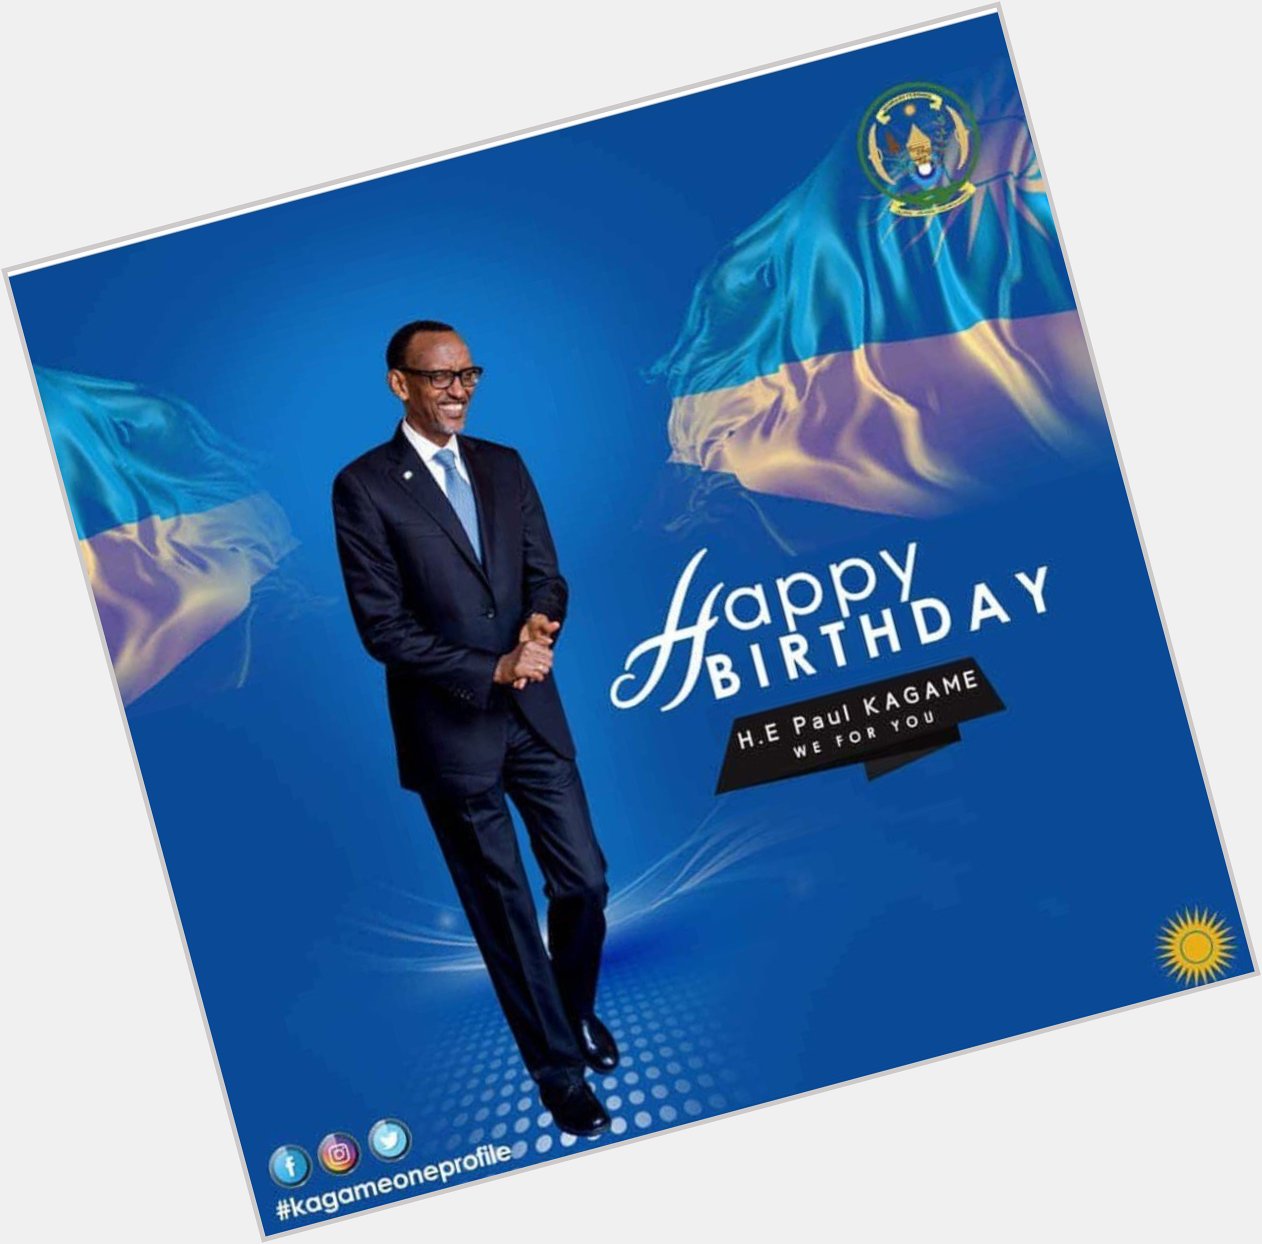 Happy birthday! Paul Kagame turns 60 today  